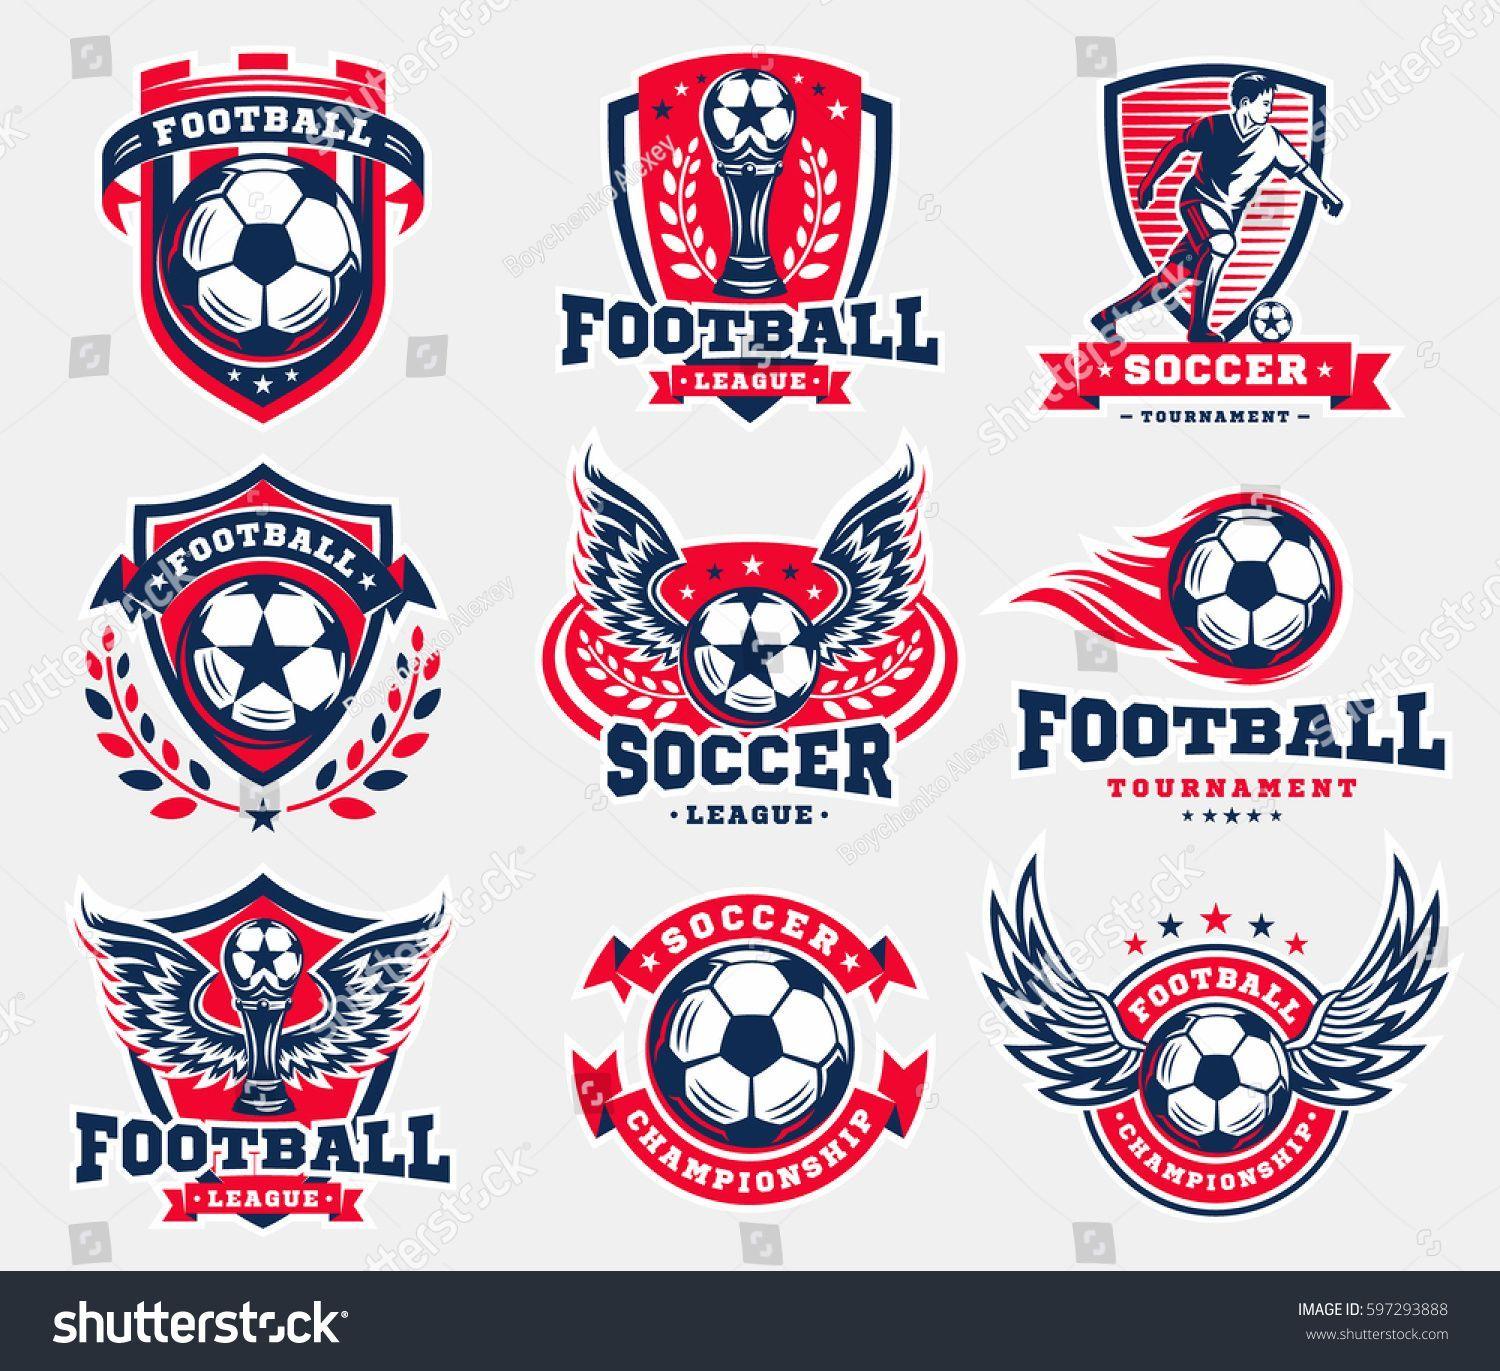 Lights Basketball Logo - Soccer football logo, emblem collections, designs templates on a ...